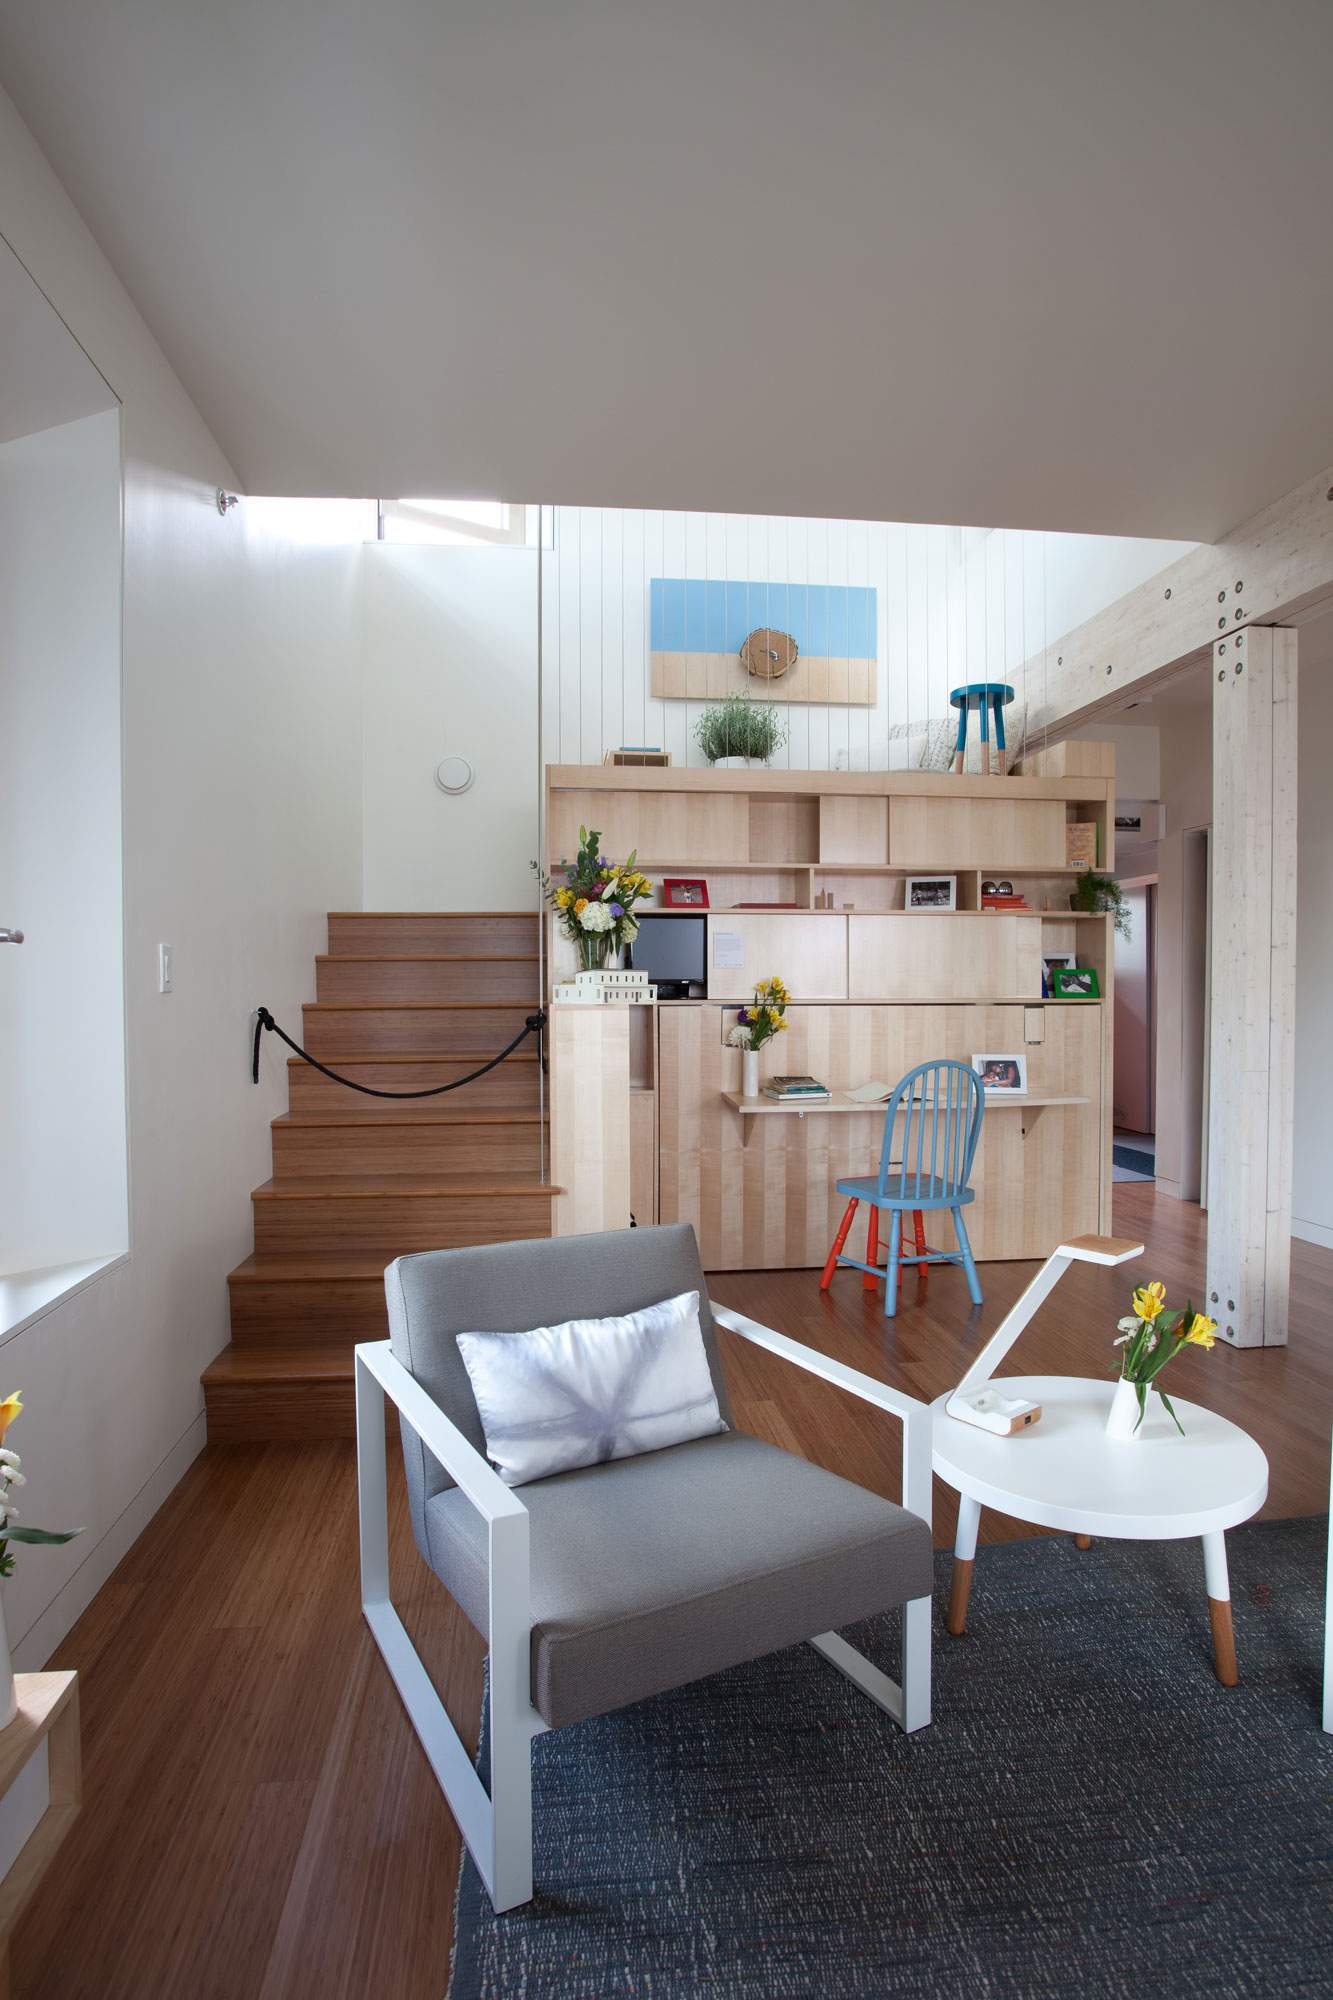 Home-design-interior-idea-EmPowerHouse-by-Parsons